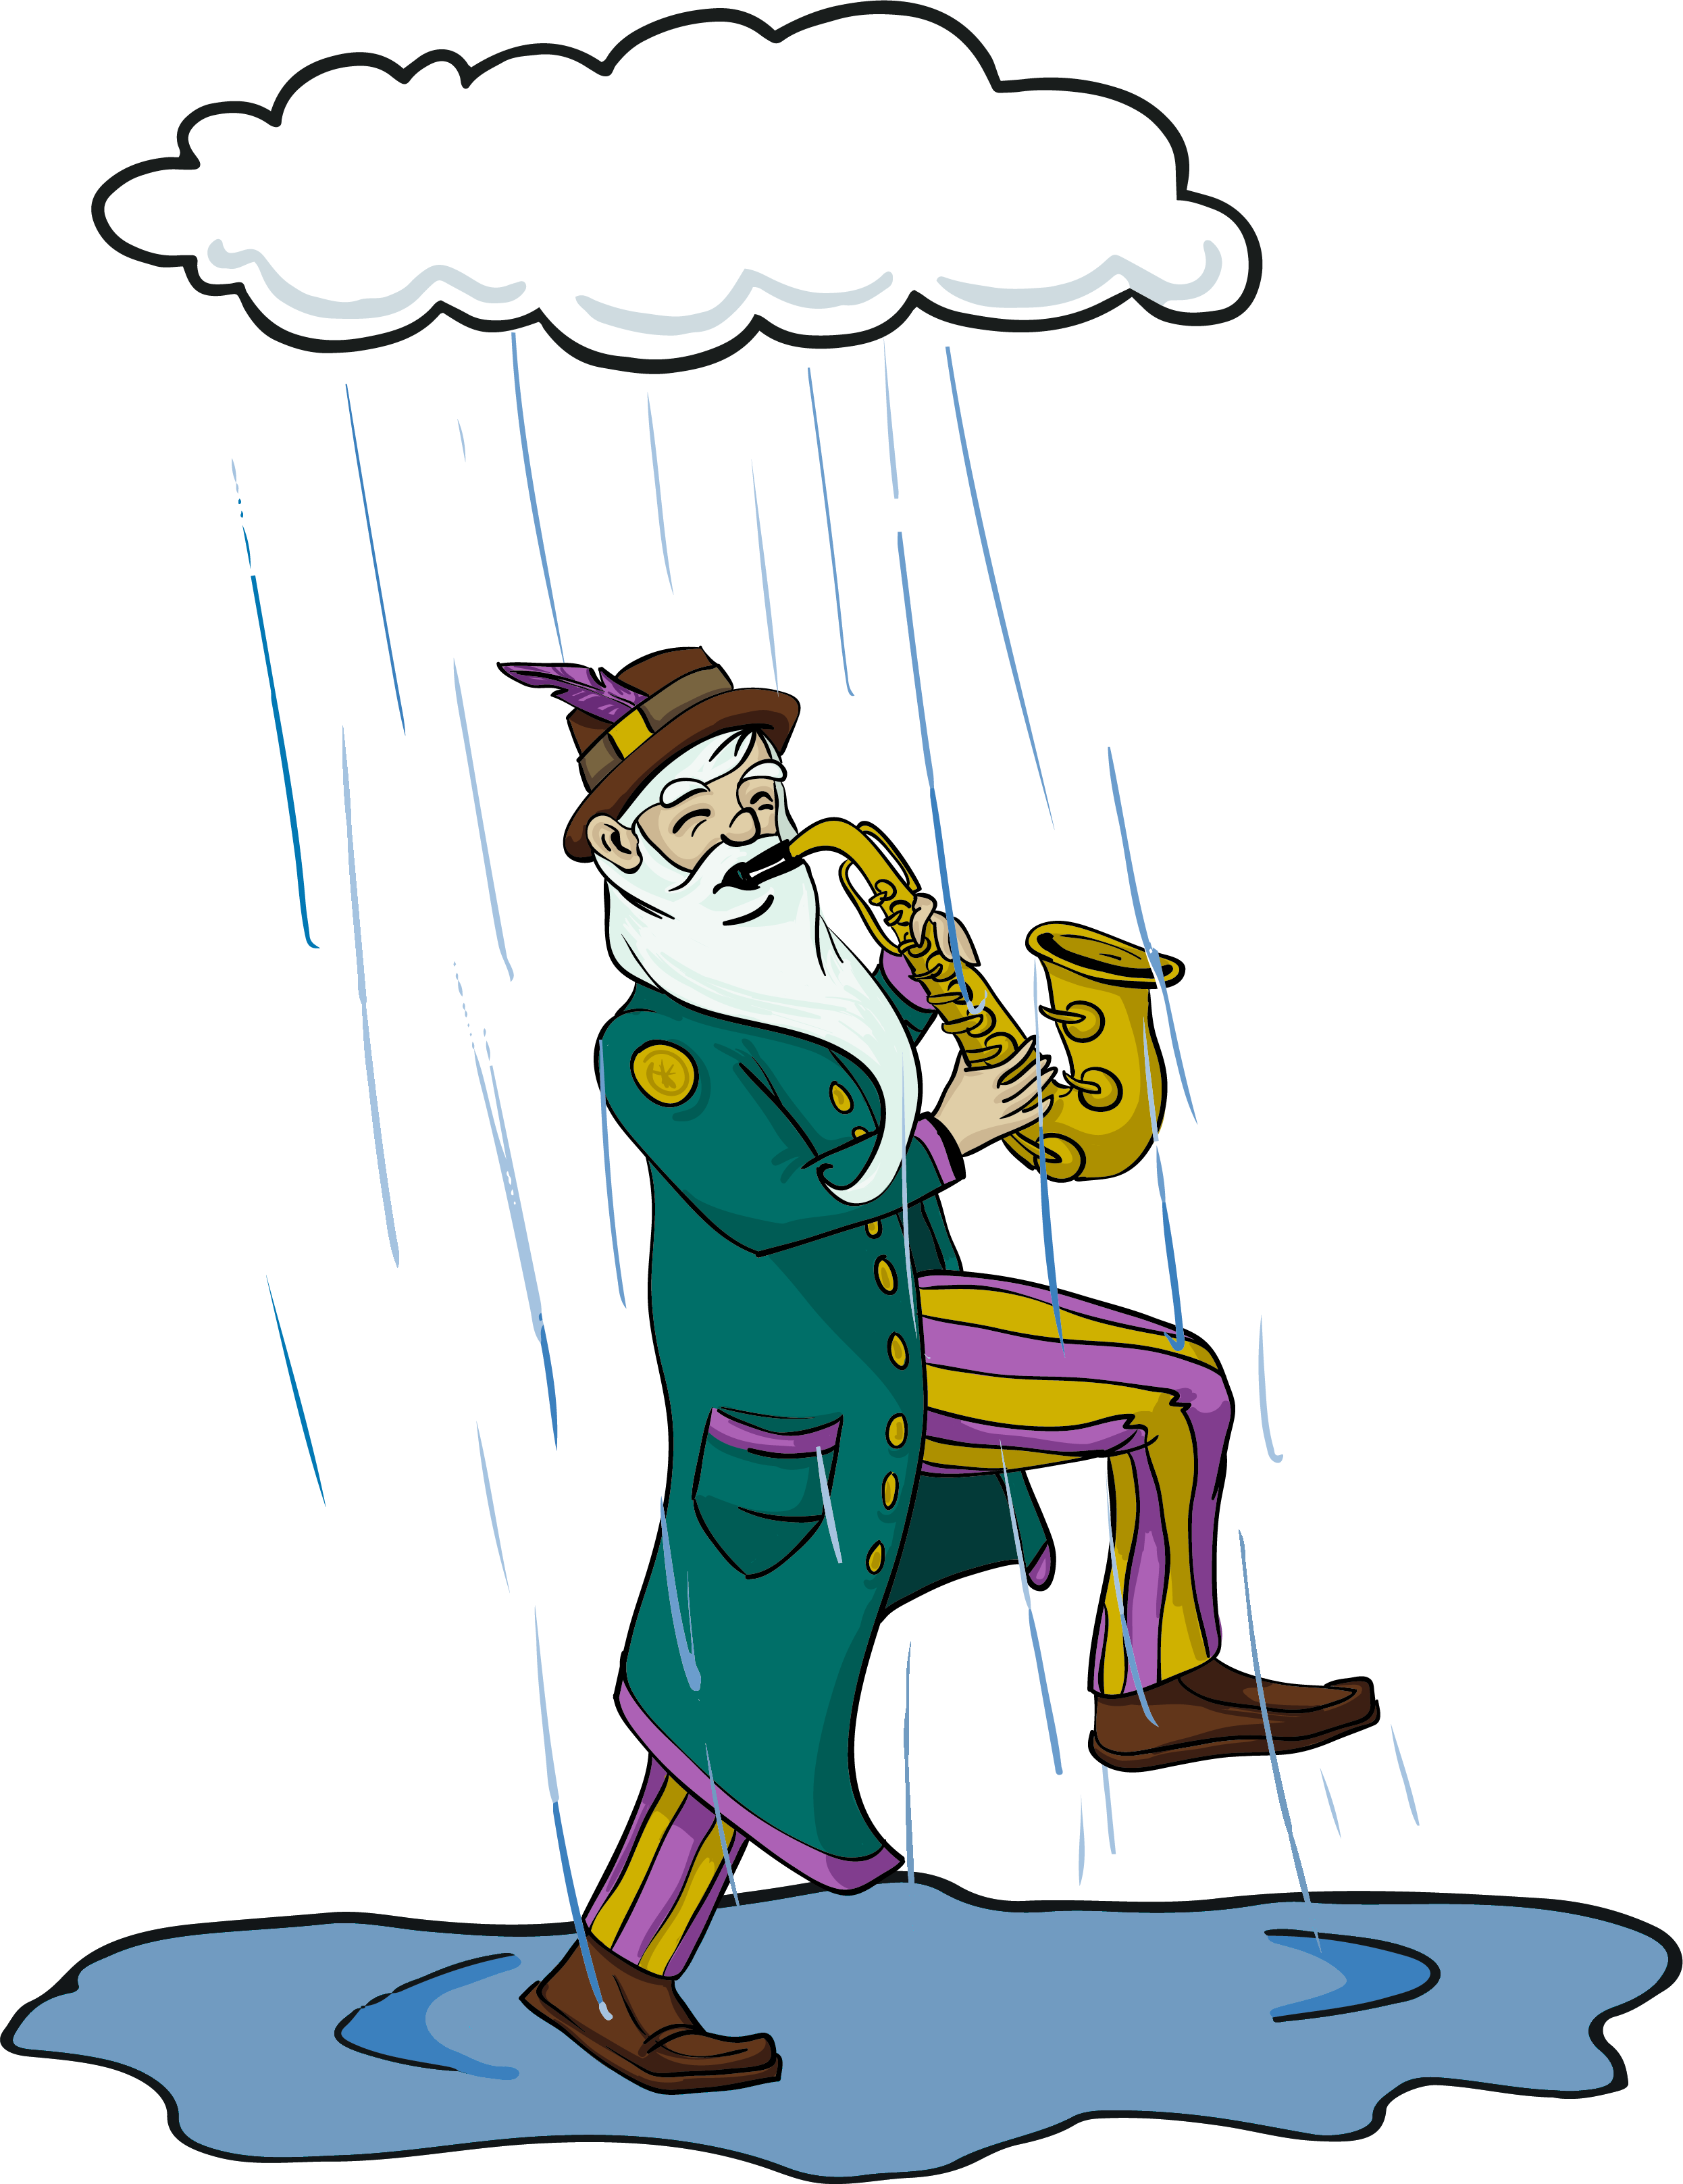 Cartoon HONK performer plays sax in the rain